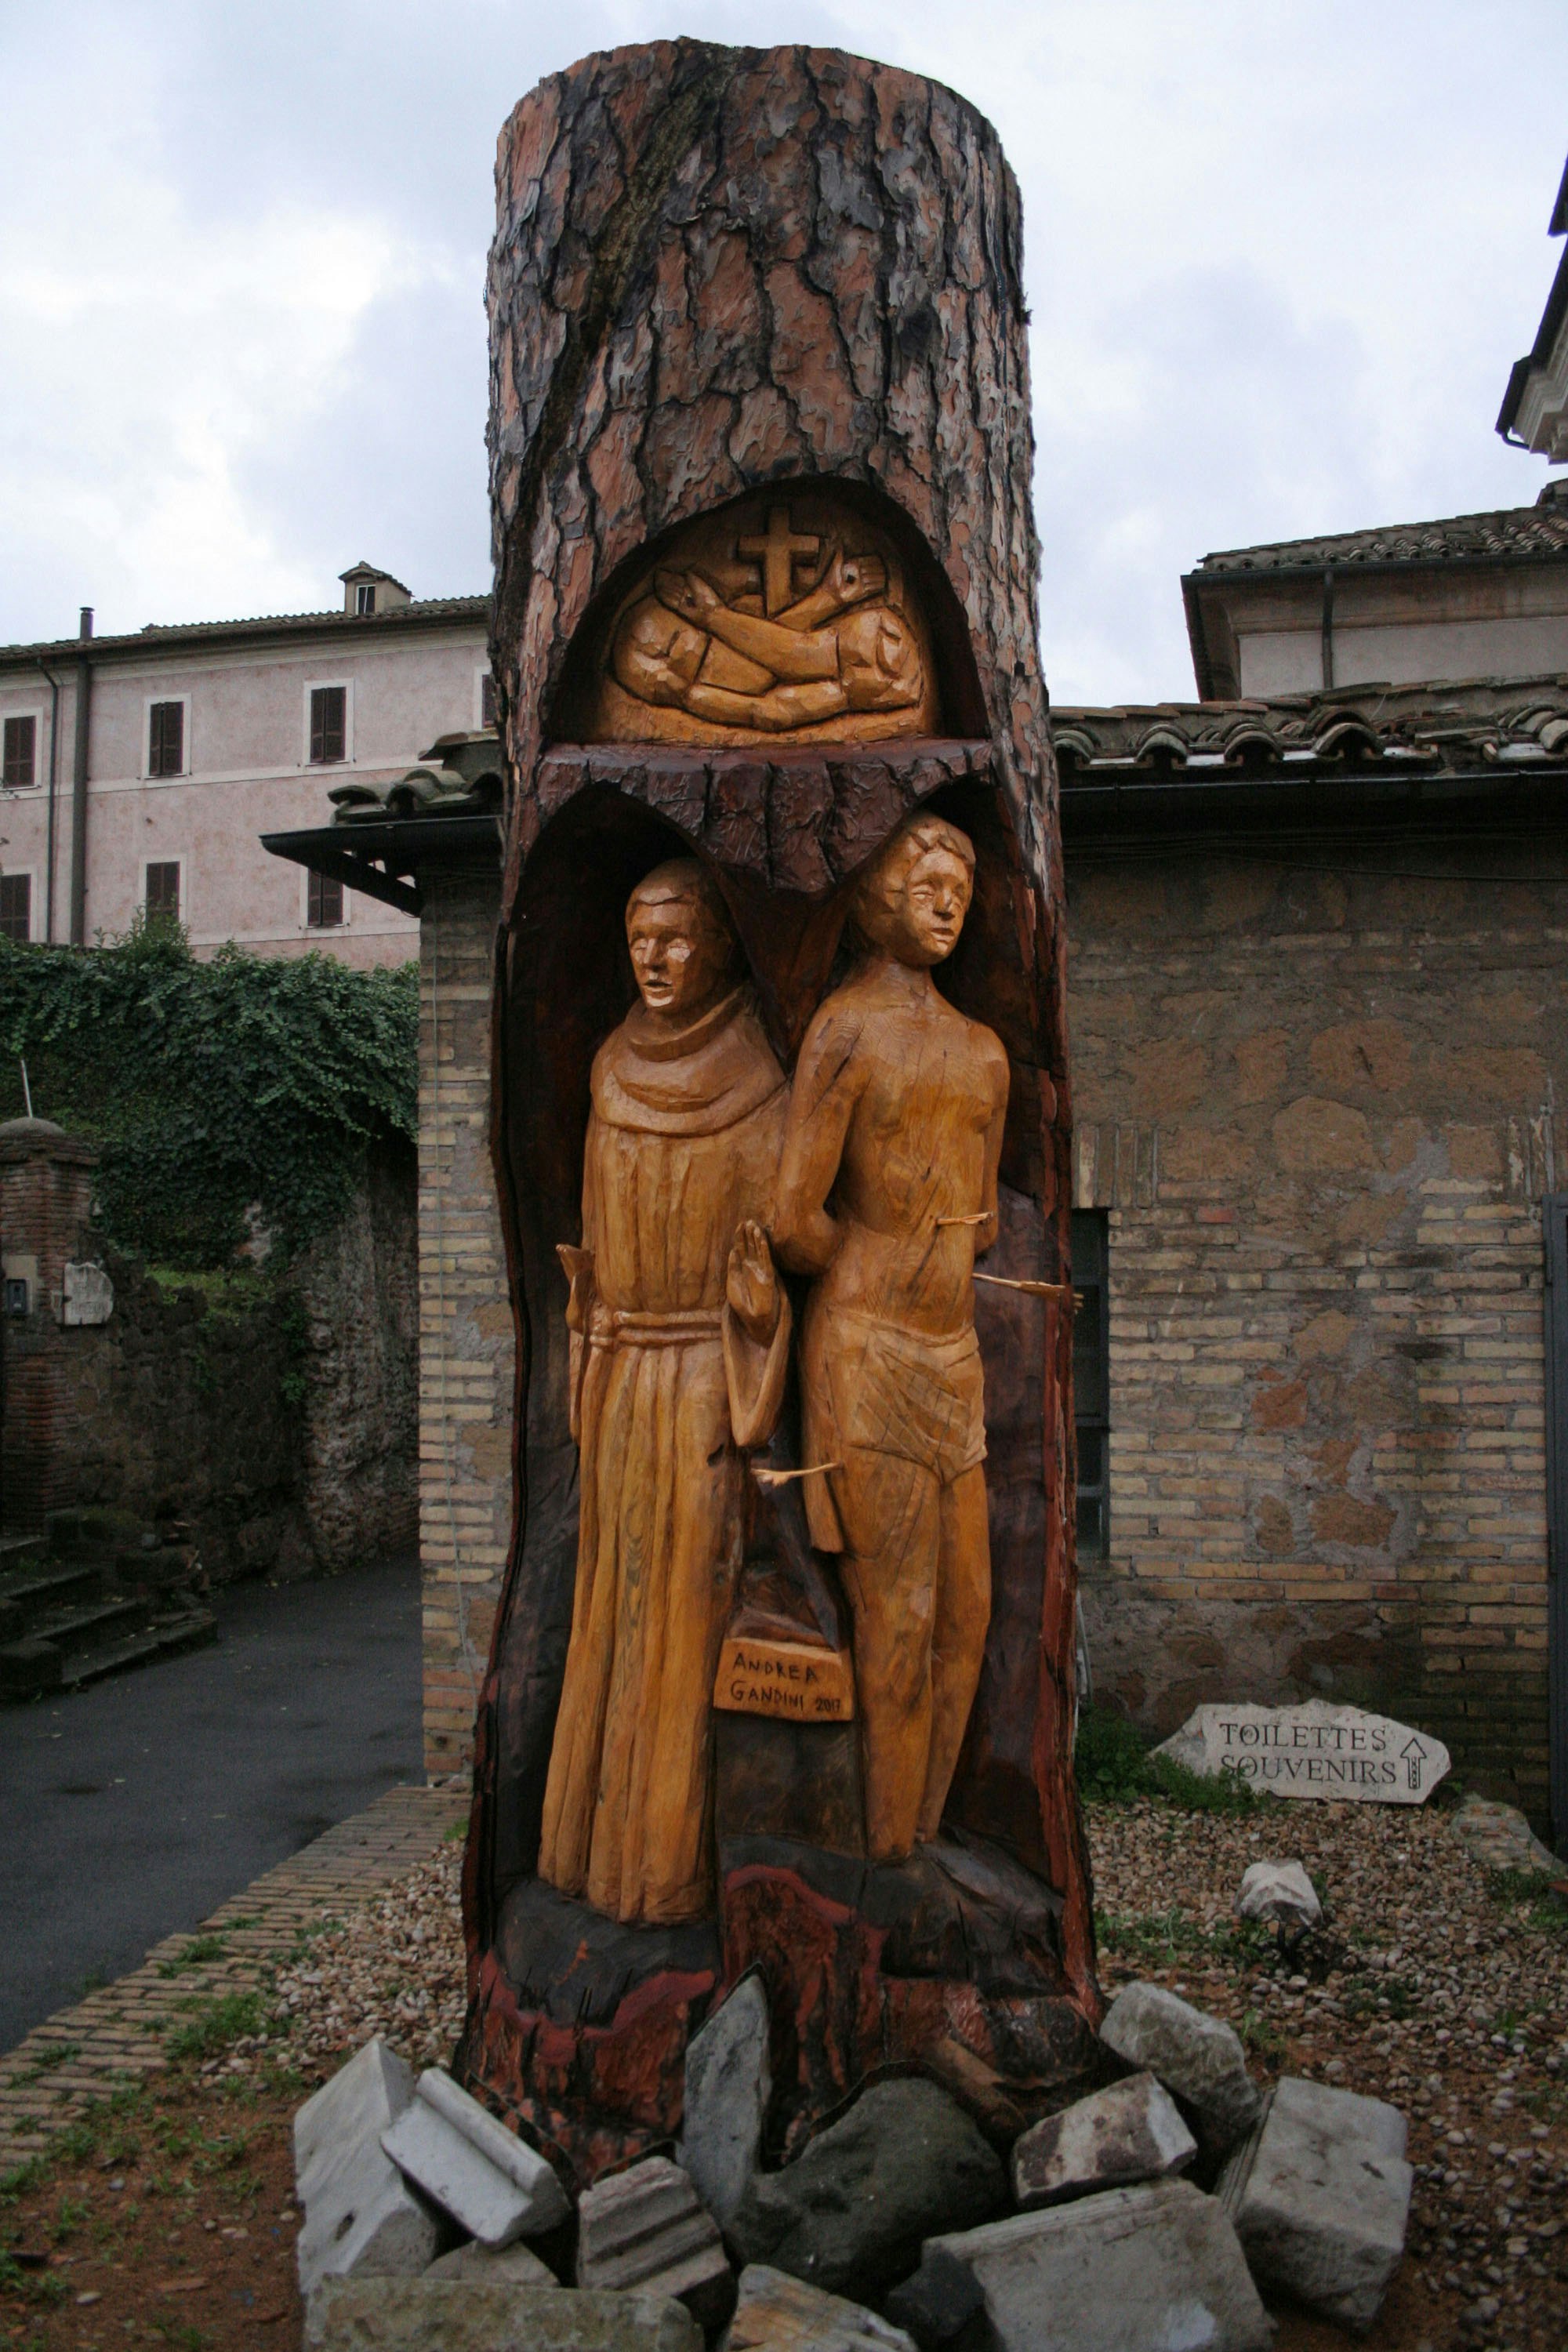 Tree stump art in Rome